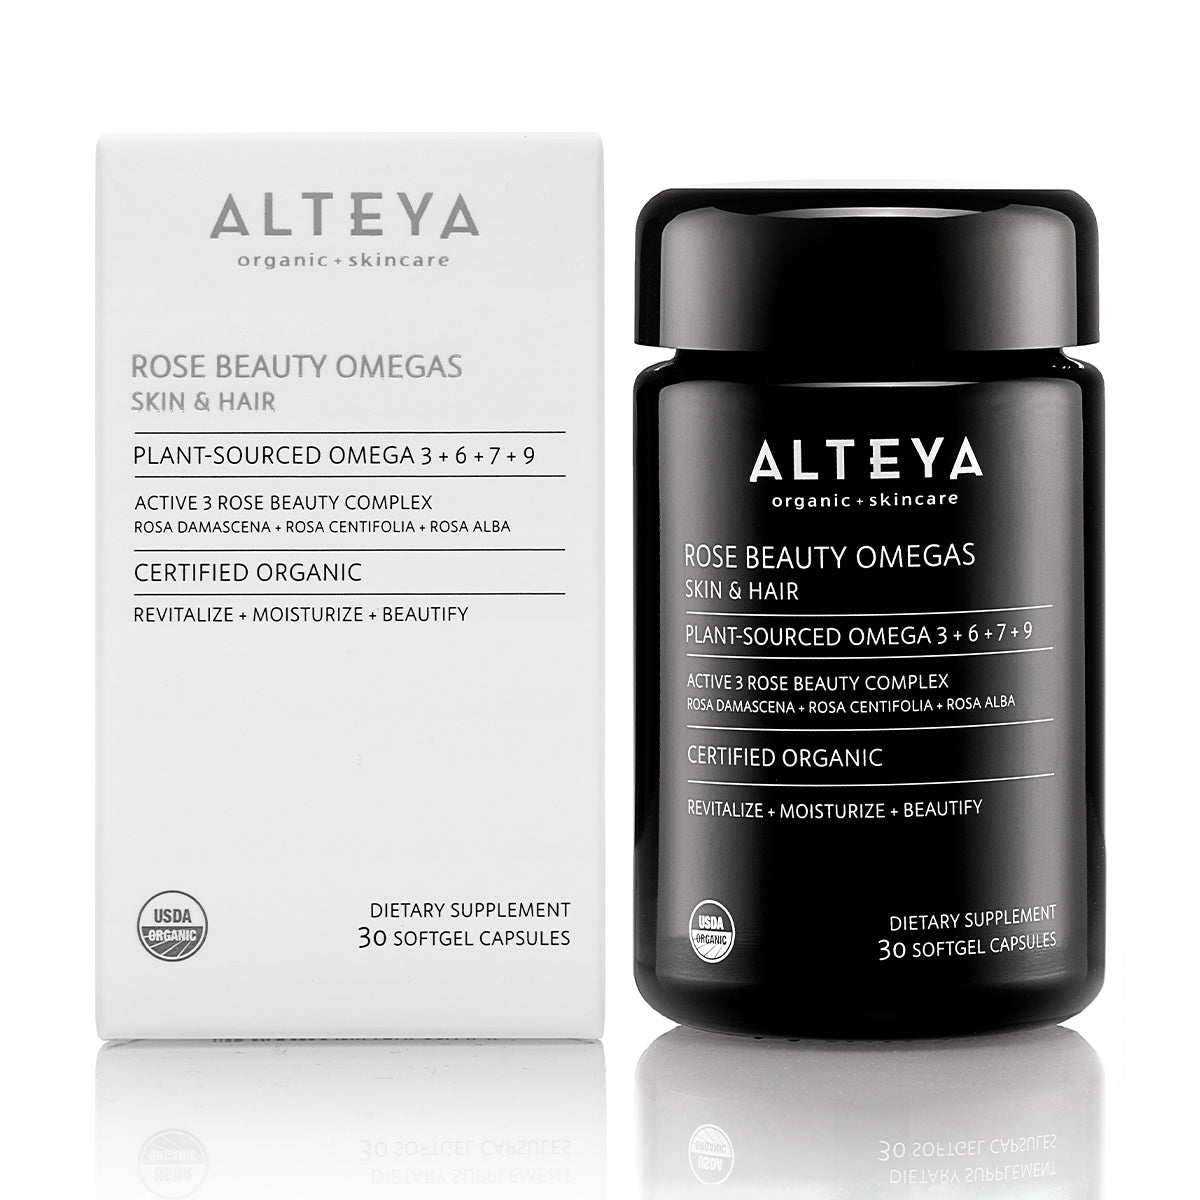 Alteya Organics Rose Beauty Omegas Skin & Hair Organic Supplement is an organic dietary formula packed with antioxidants.